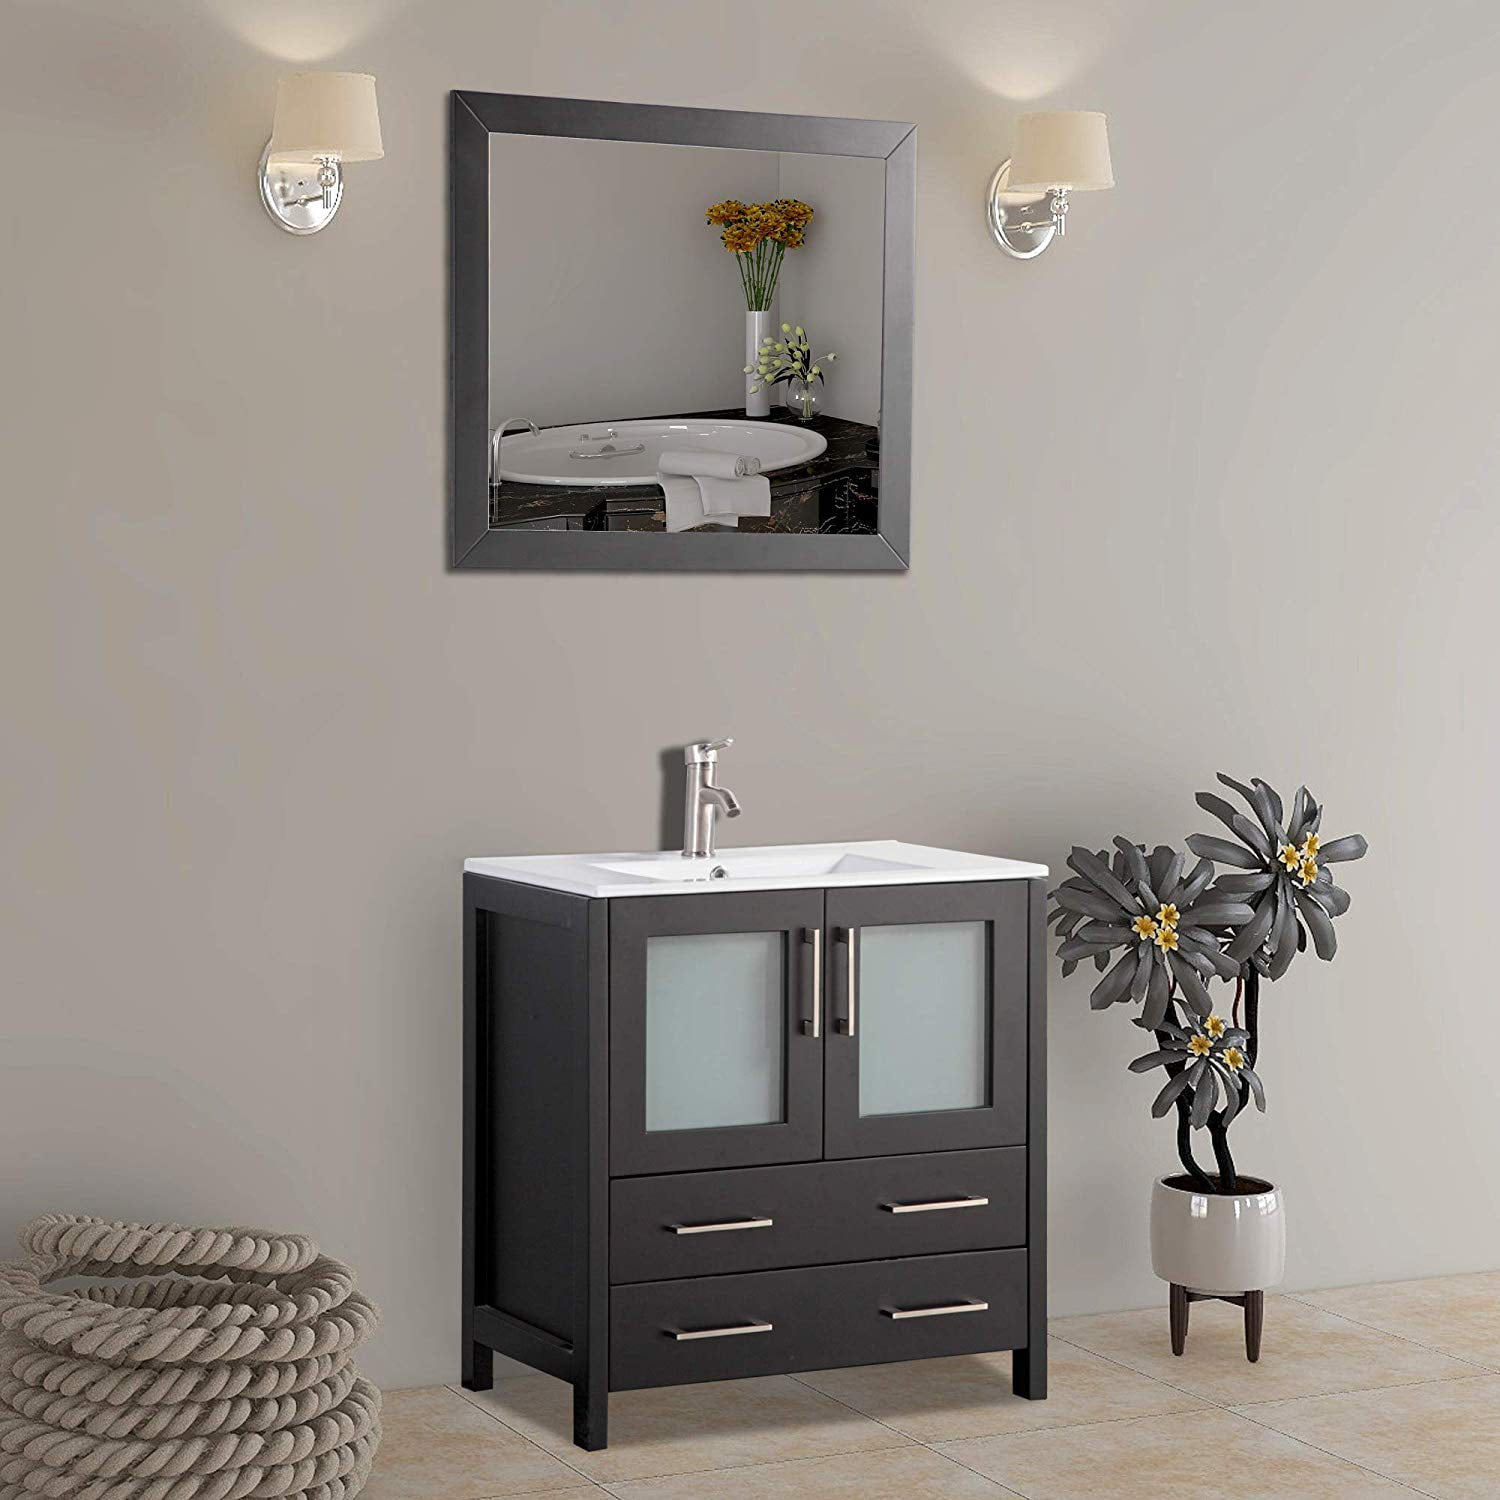 Bathroom Furniture For Small Bathrooms - BEST HOME DESIGN IDEAS